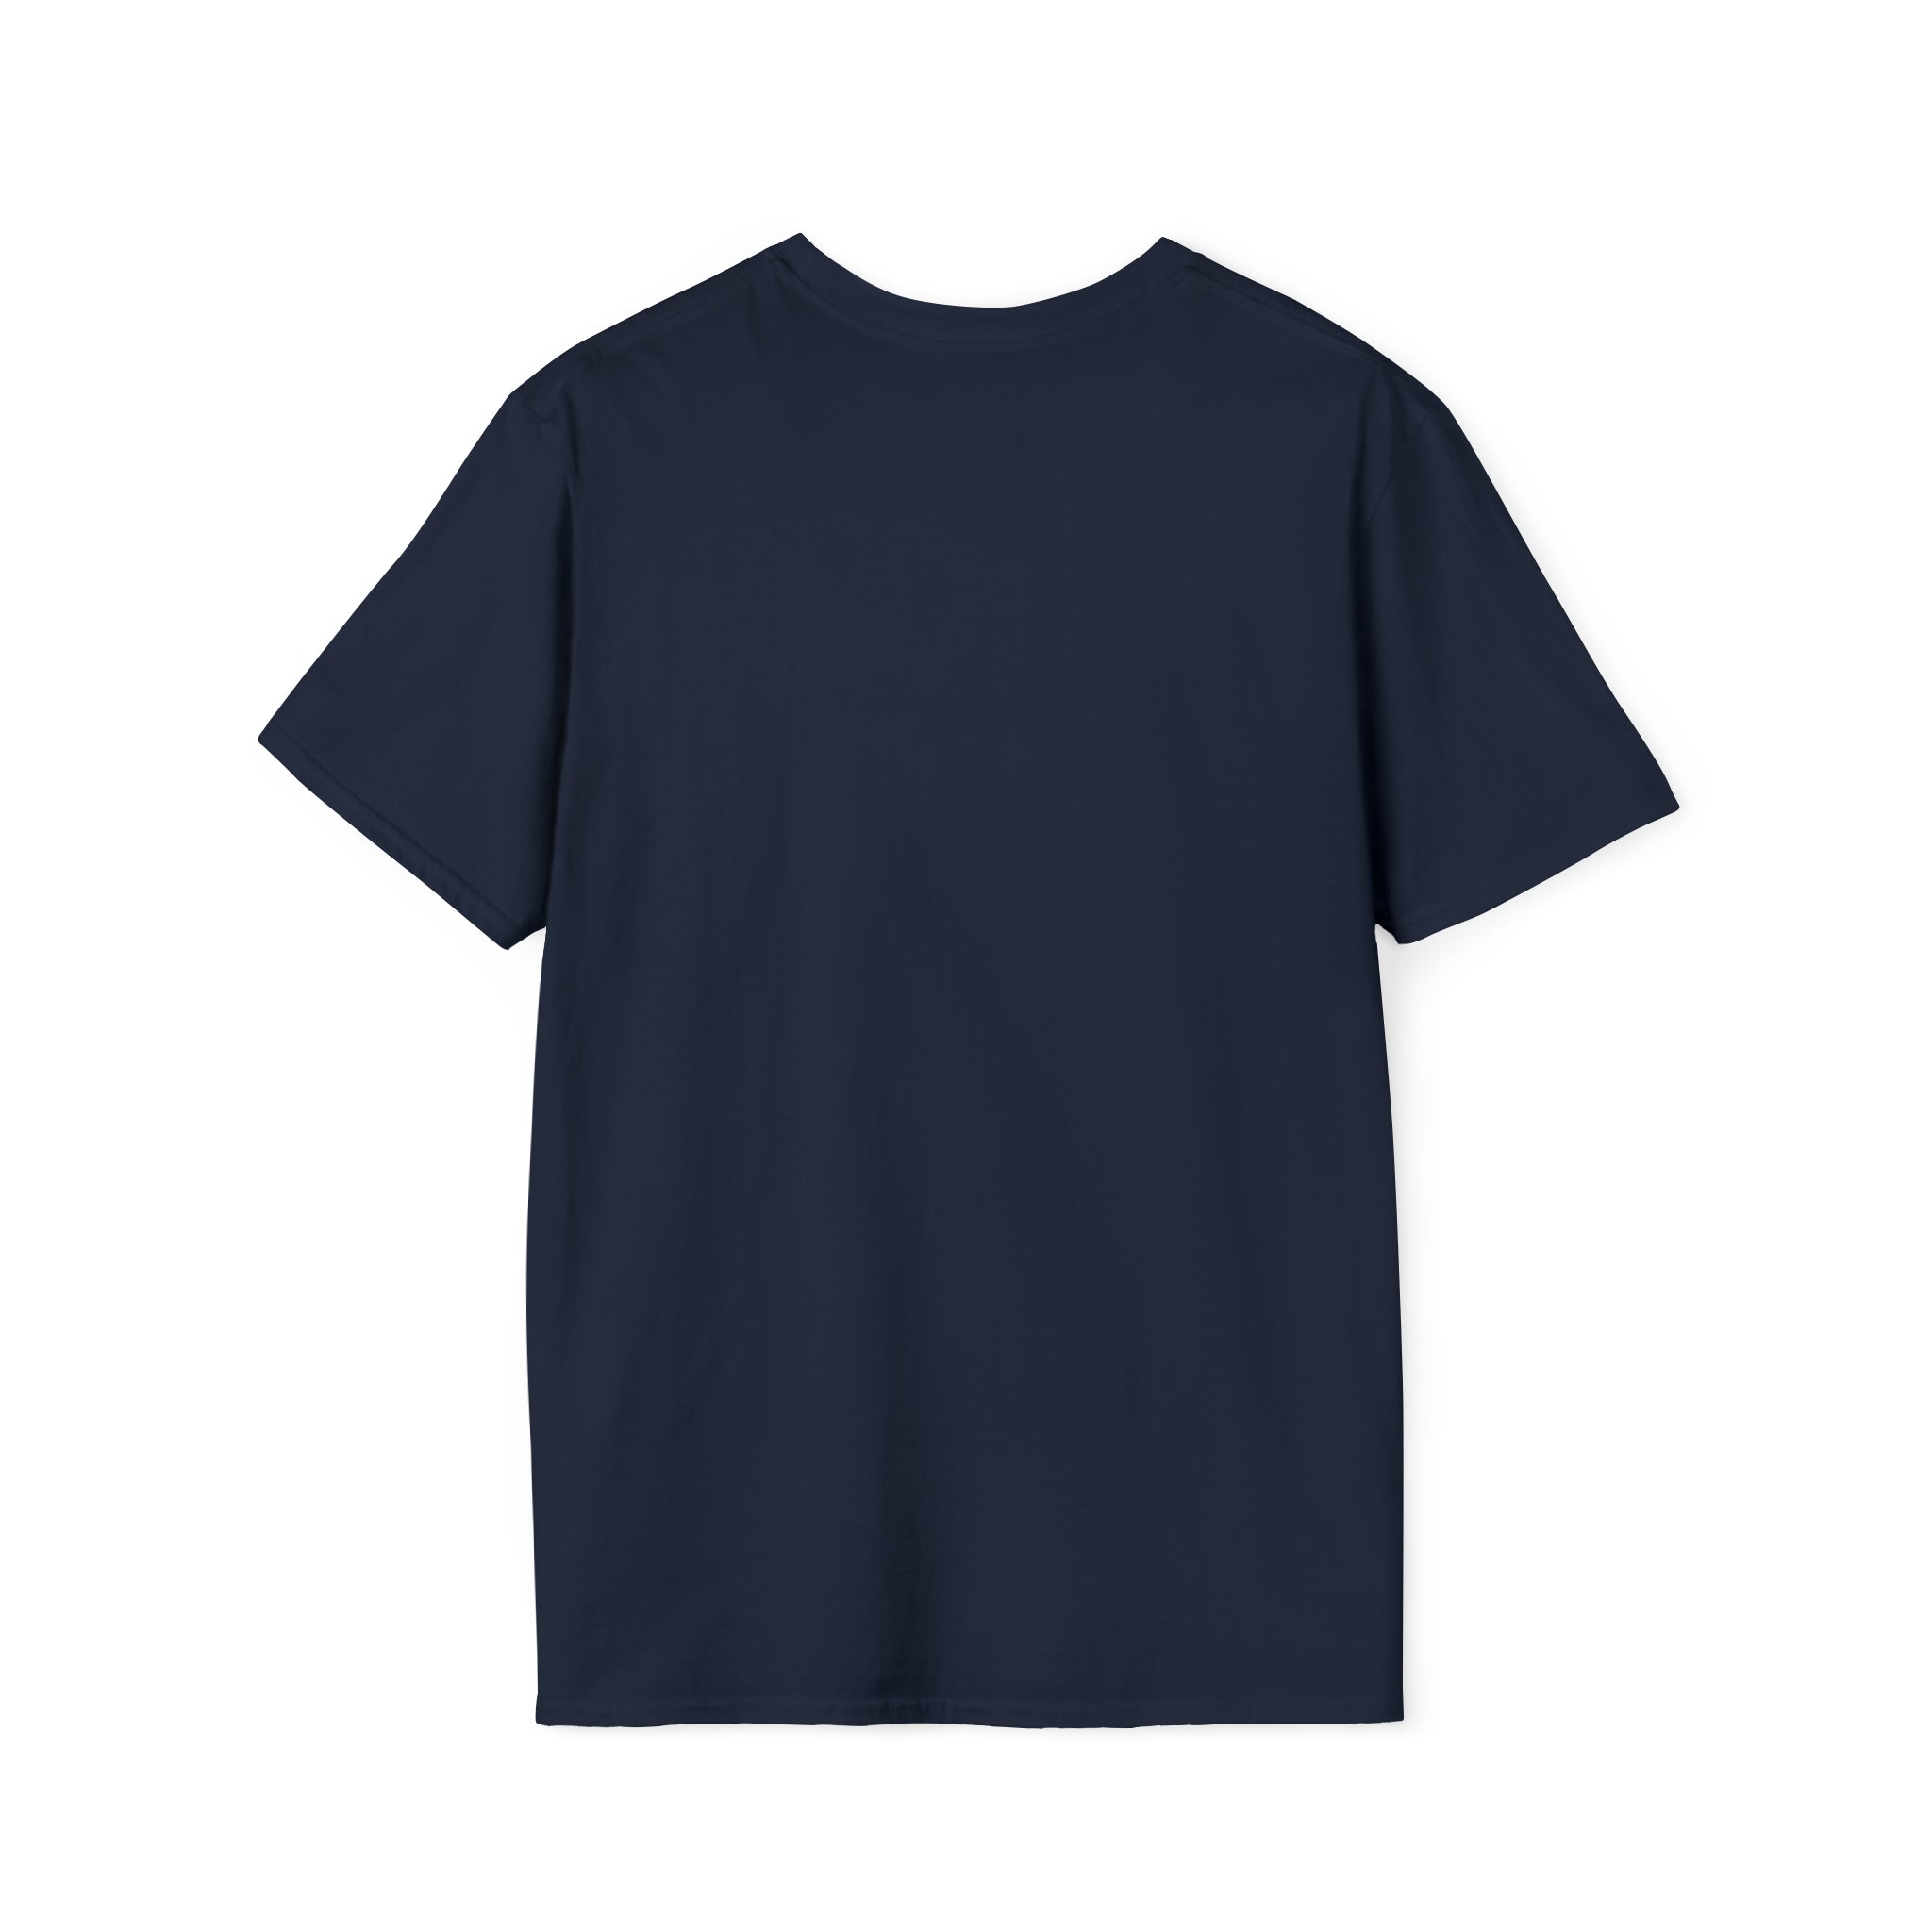 Mandatory Family Fun Coordinator - Men's Unisex Softstyle T-Shirt